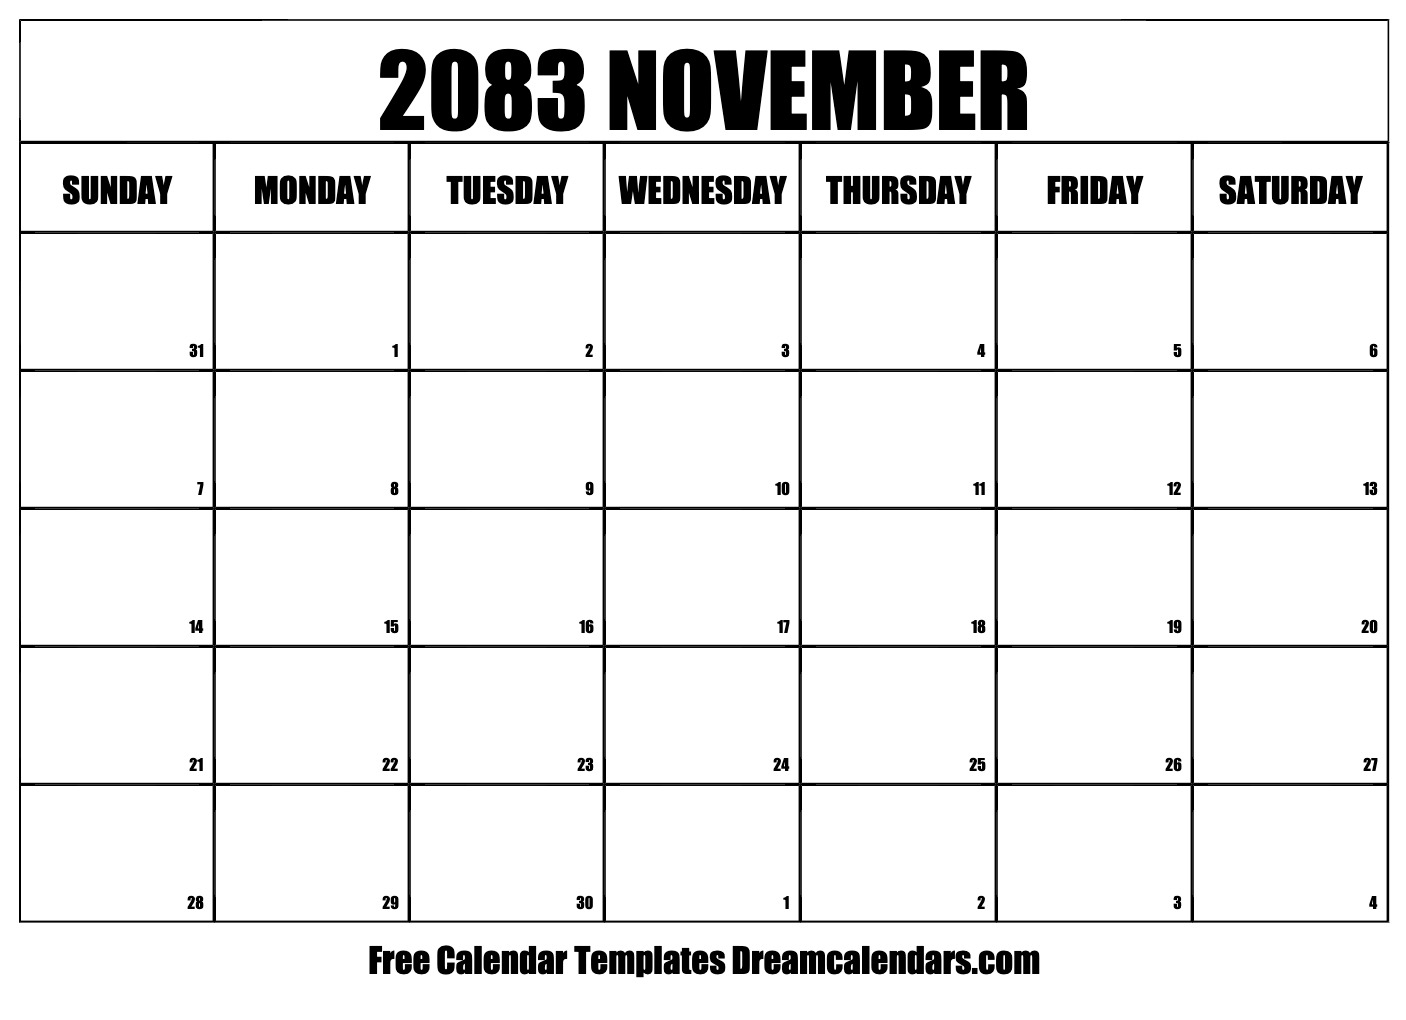 november-2083-calendar-free-blank-printable-with-holidays